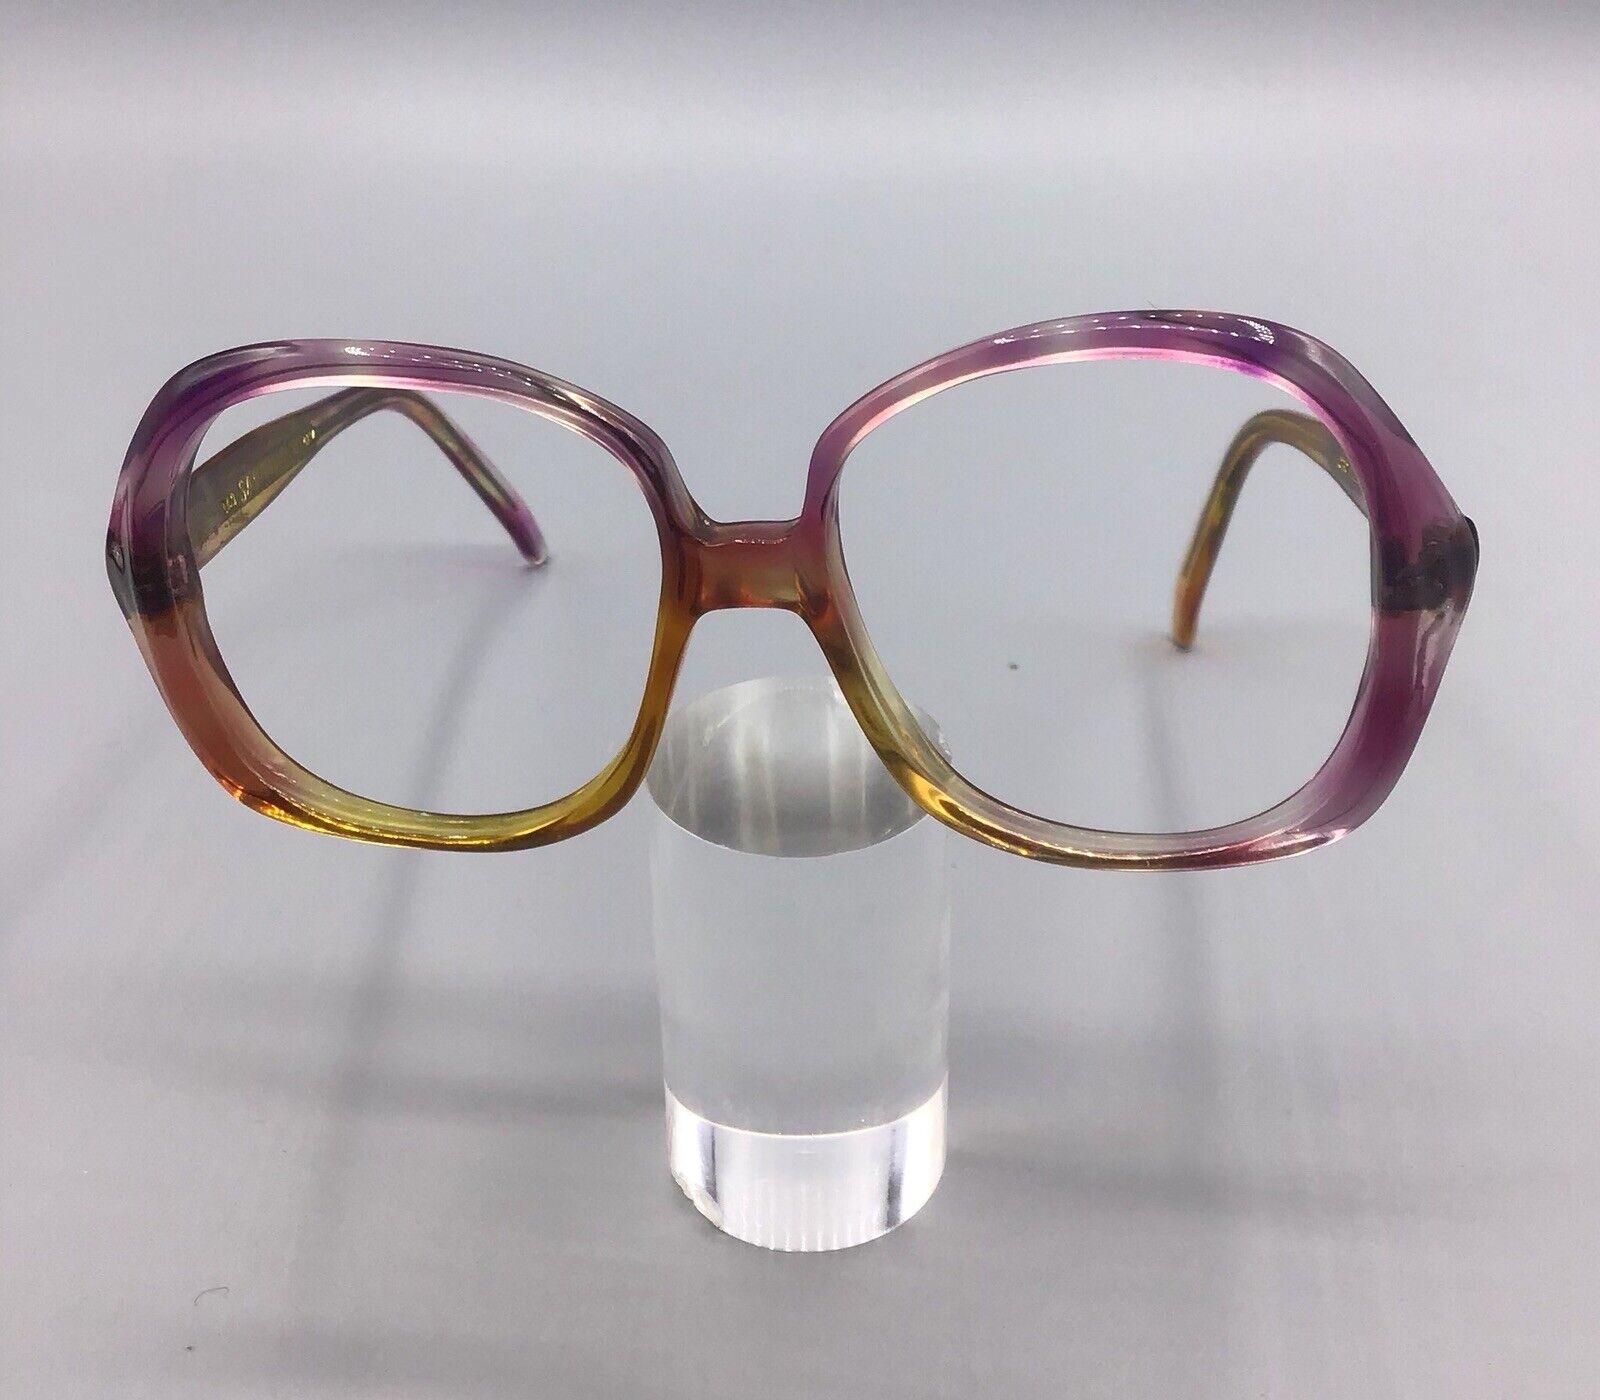 safilo denise 030 frame italy occhiale vintage eyewear brillen lunettes